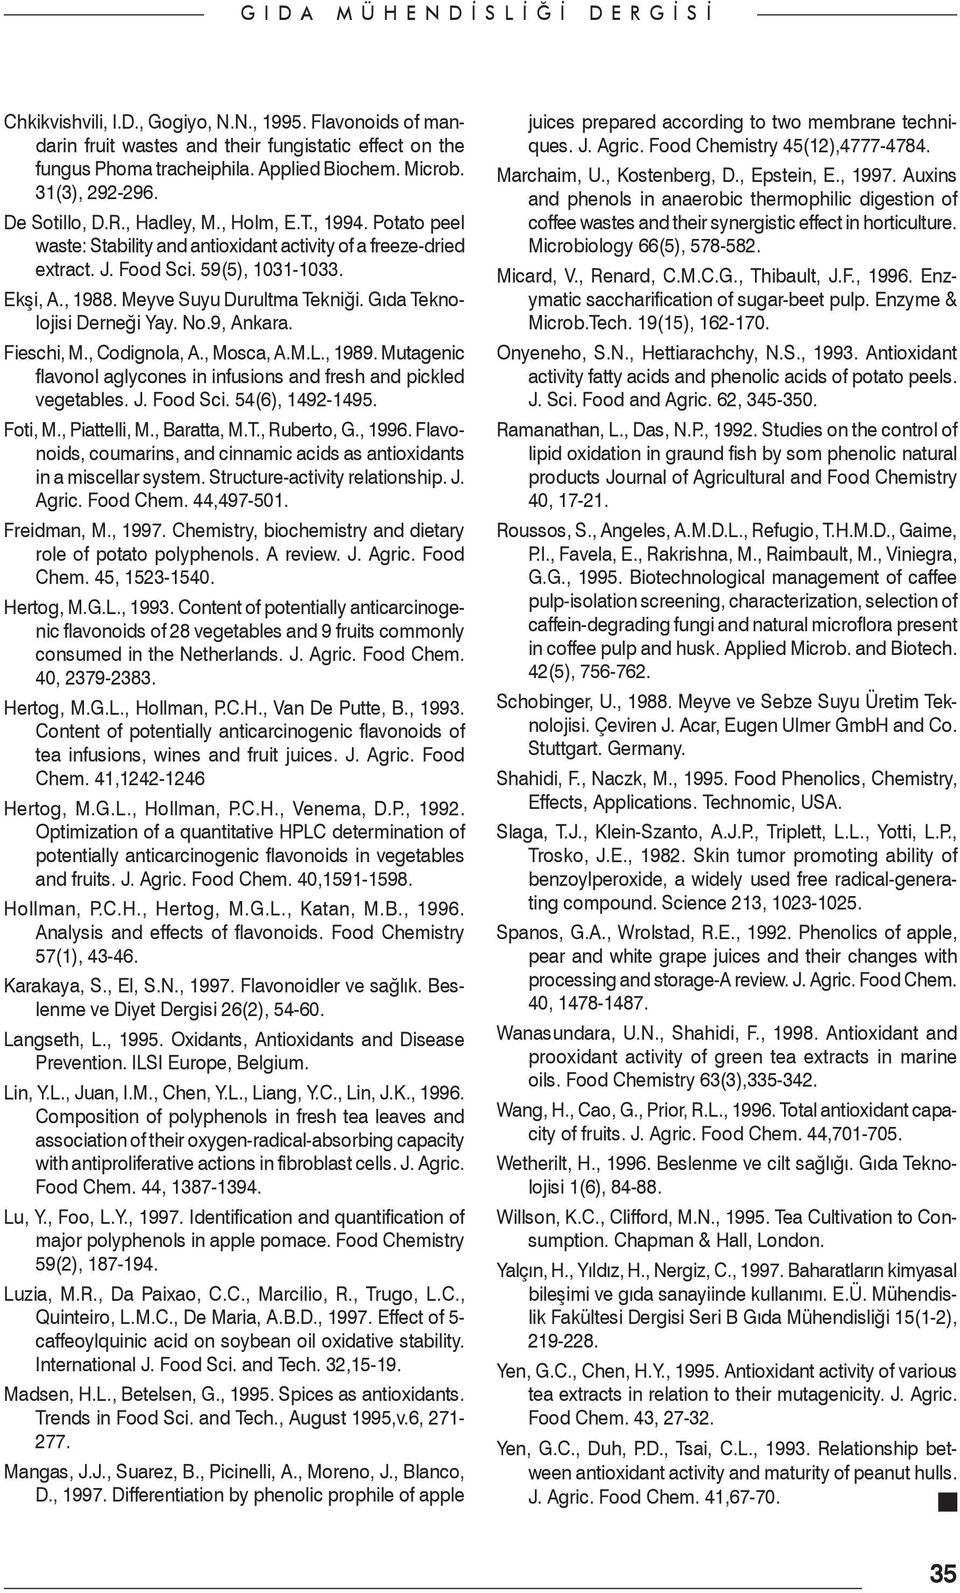 Gıda Teknolojisi Derneği Yay. No.9, Ankara. Fieschi, M., Codignola, A., Mosca, A.M.L., 1989. Mutagenic flavonol aglycones in infusions and fresh and pickled vegetables. J. Food Sci. 54(6), 1492-1495.